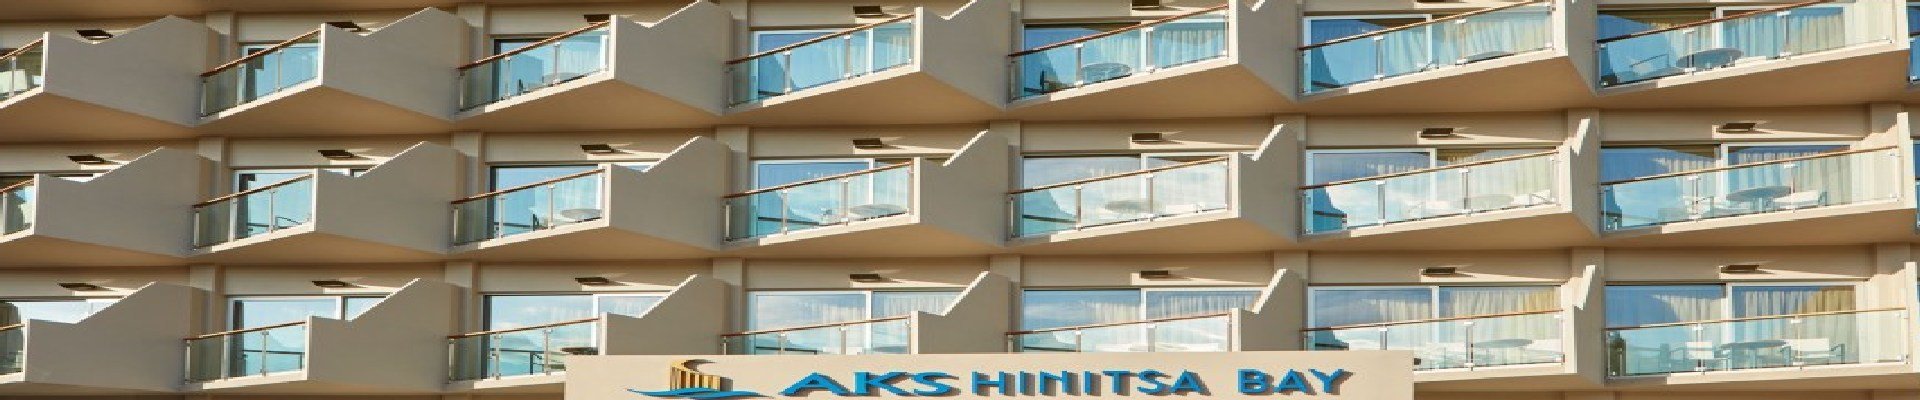 Hotel Aks Hinitsa Bay rezervacije Letovanja